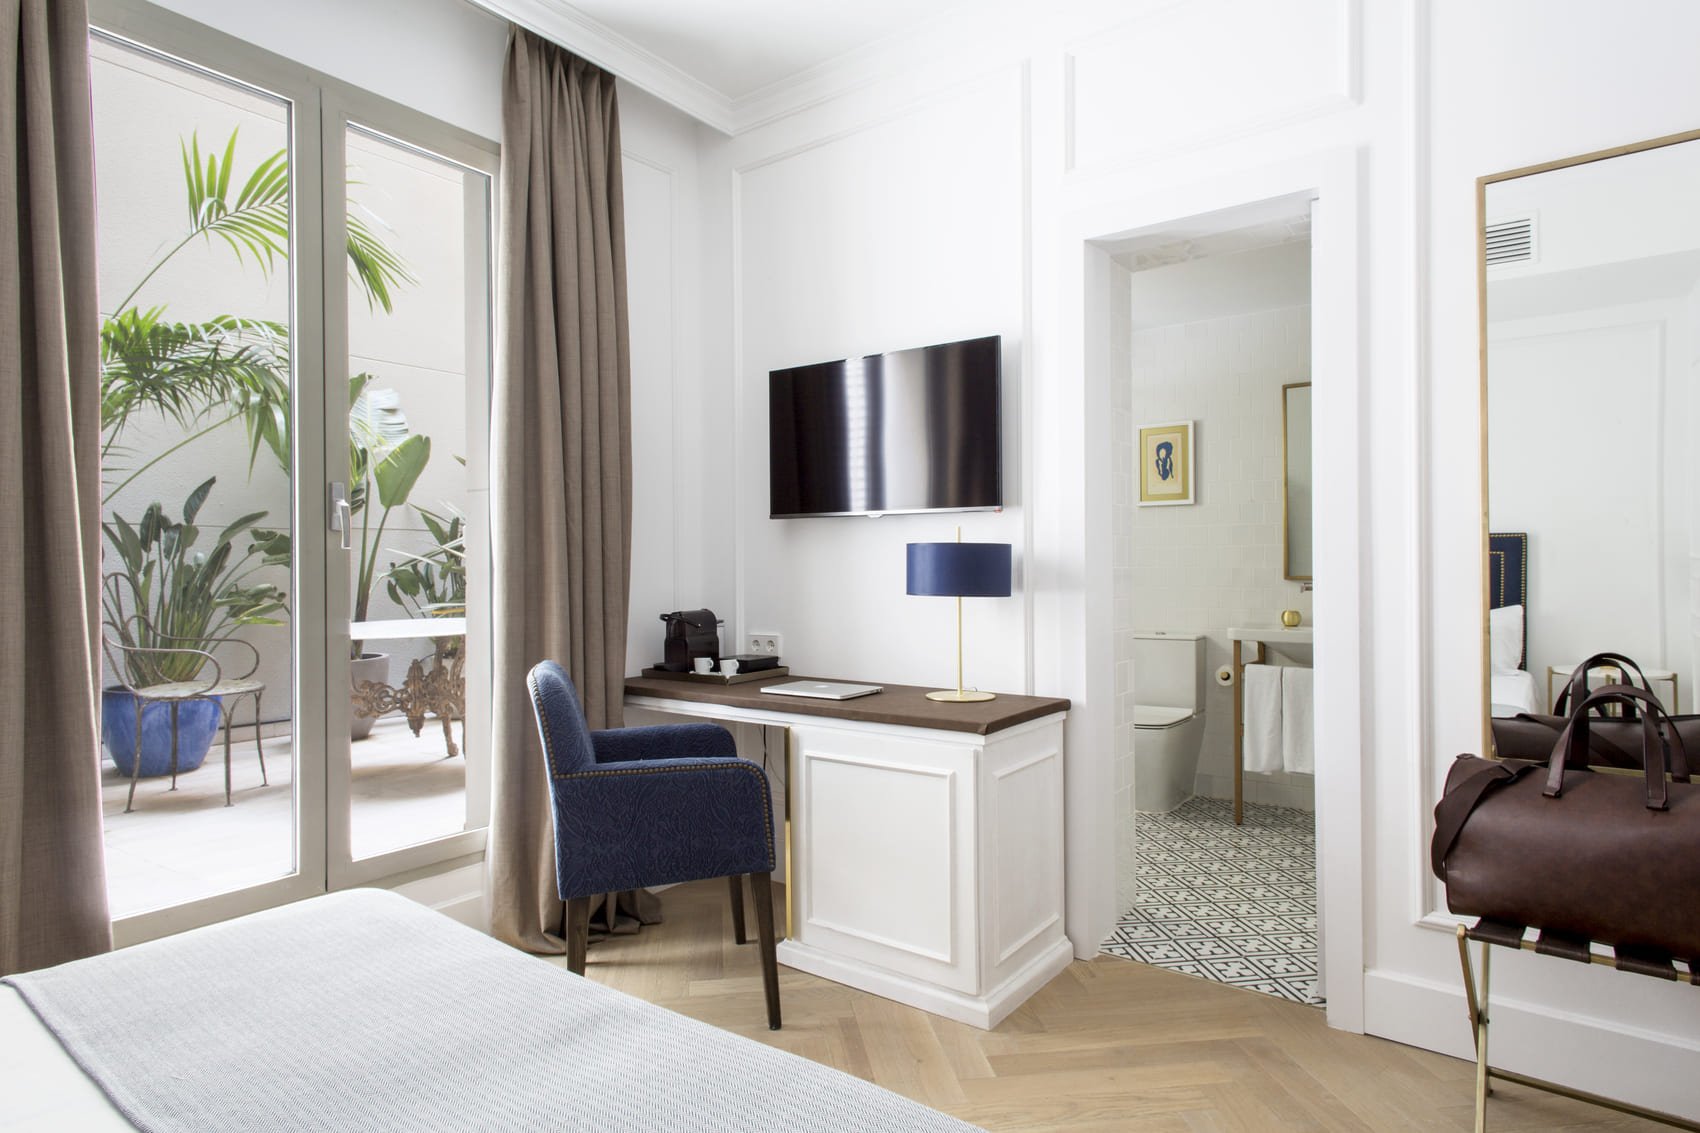 Midmost Hotel - boutique design hotel - Spain Barcelona - room suite